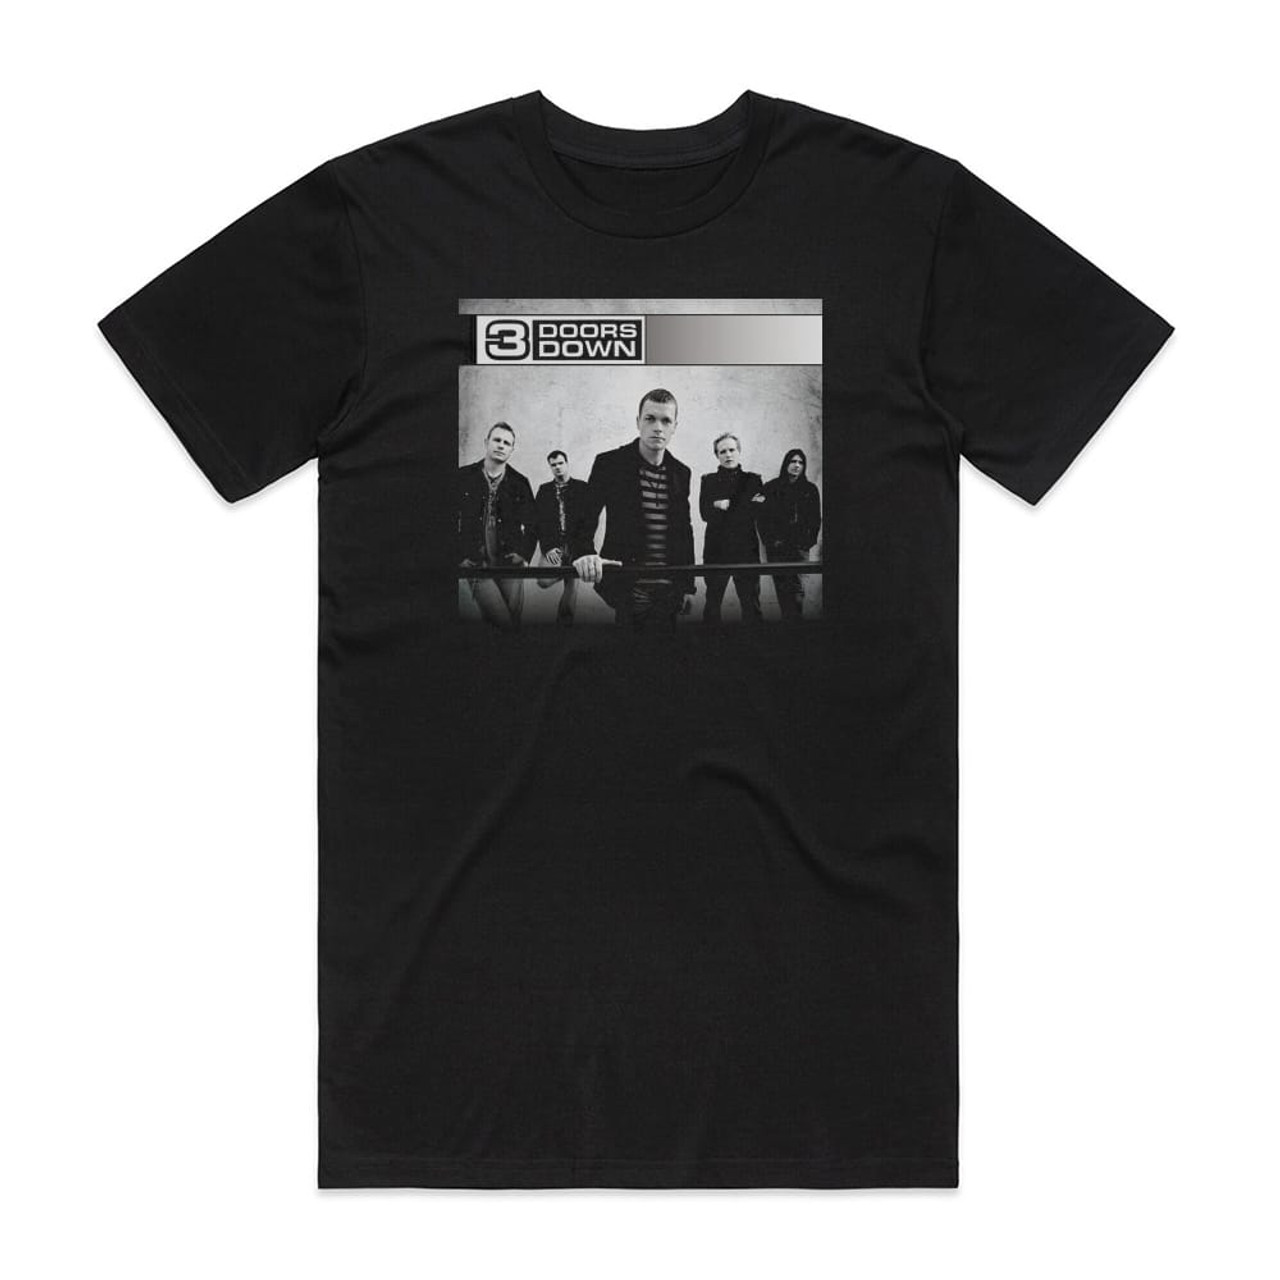 3 Doors Down 3 Doors Down Album Cover T-Shirt Black